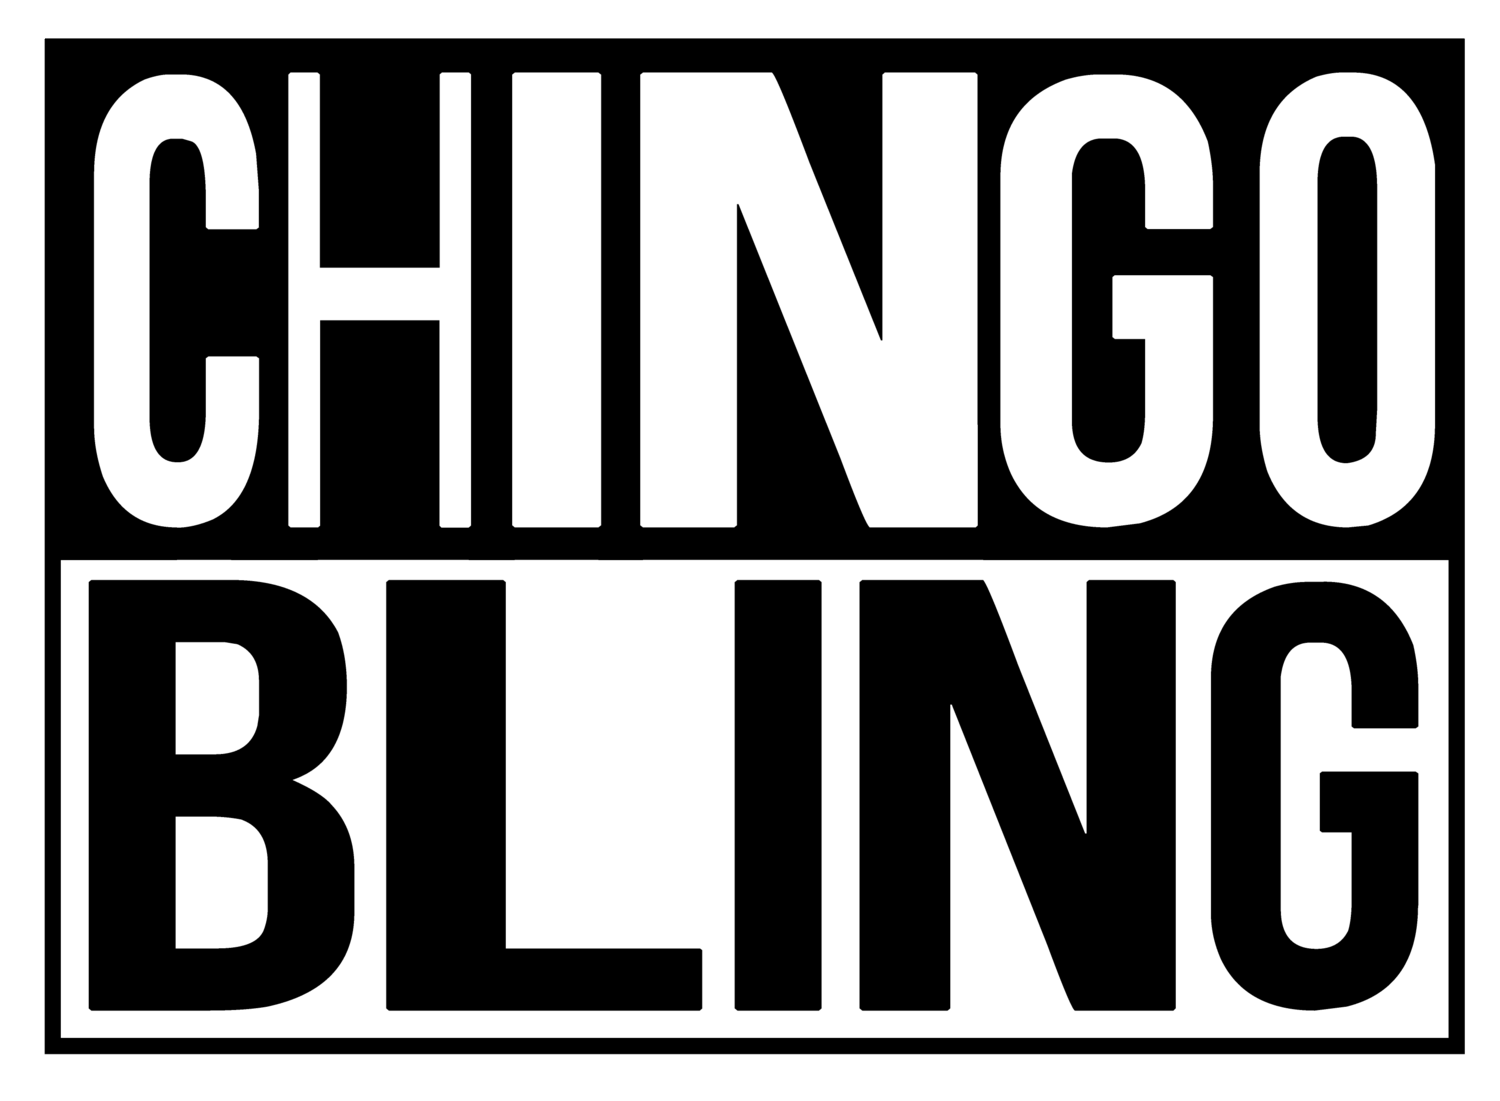 Chingo Bling - Professional Comedian